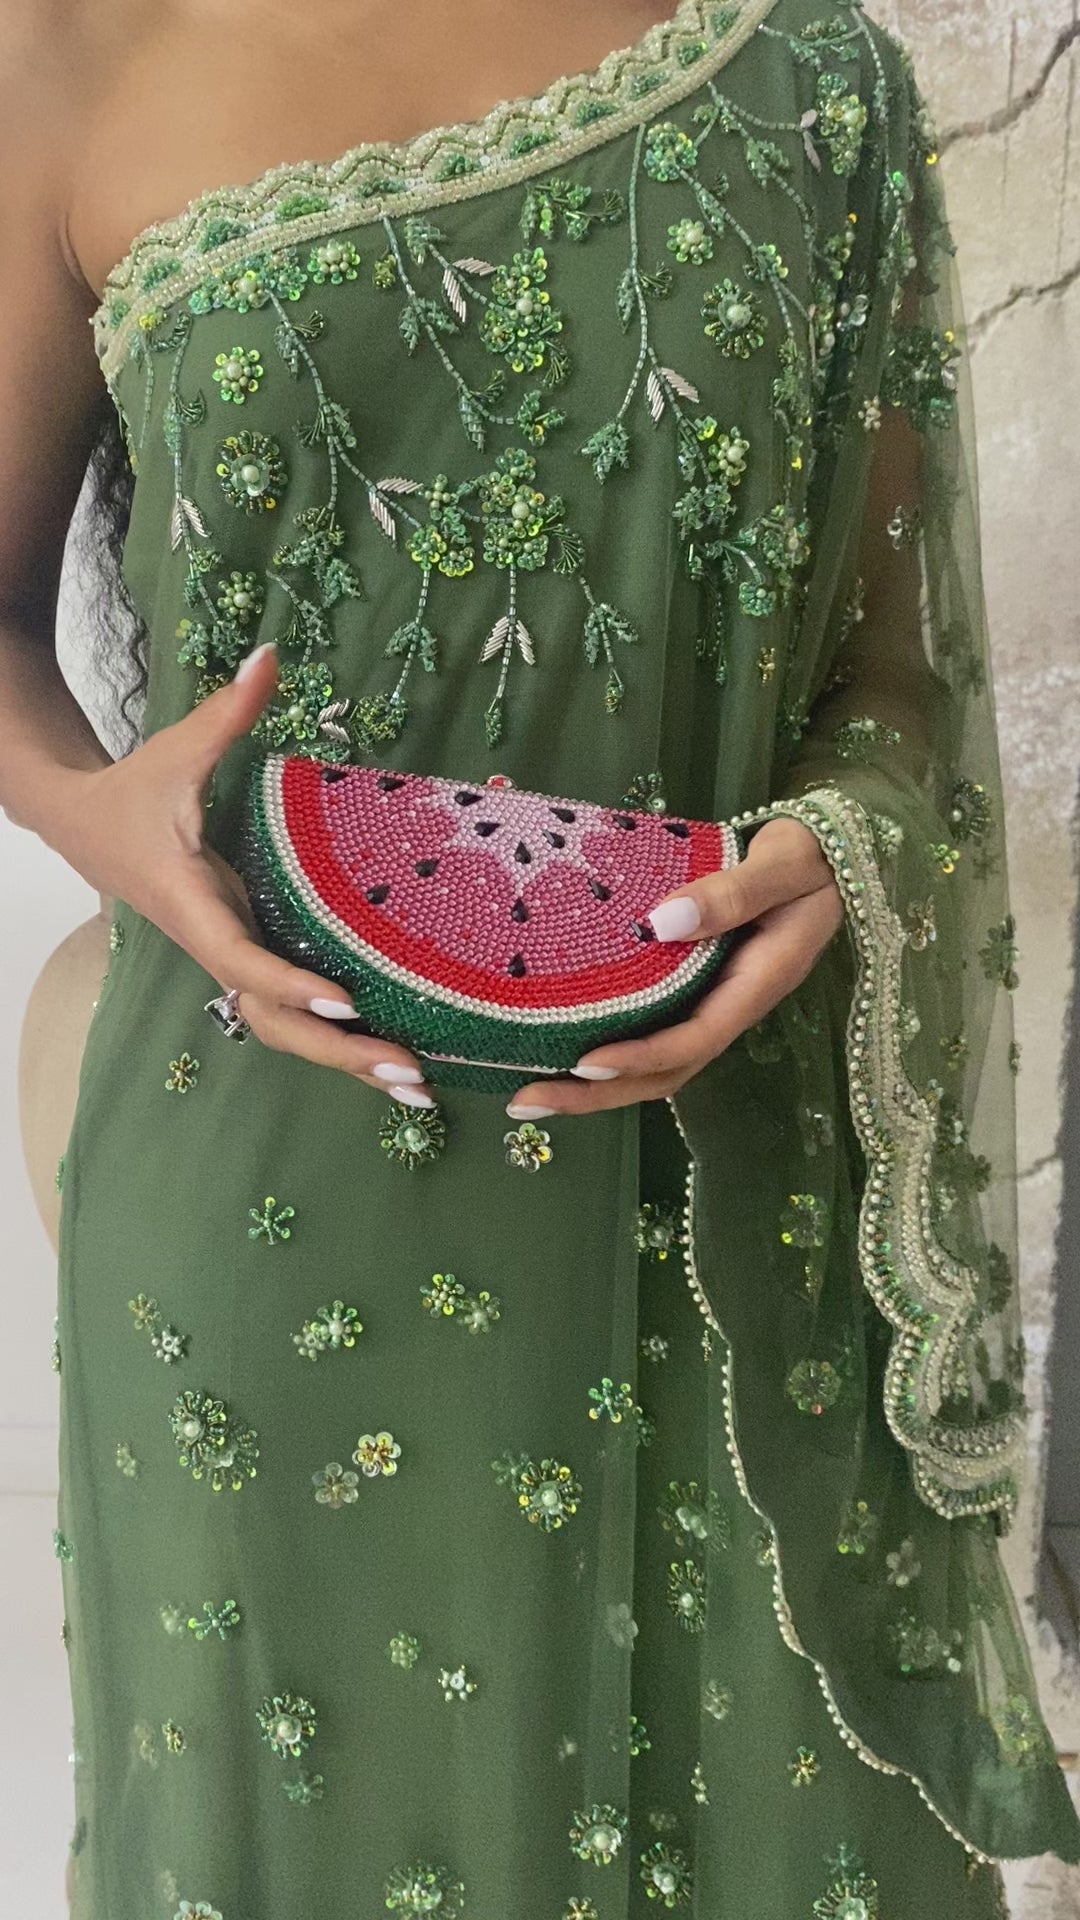 FP Watermelon Clutch